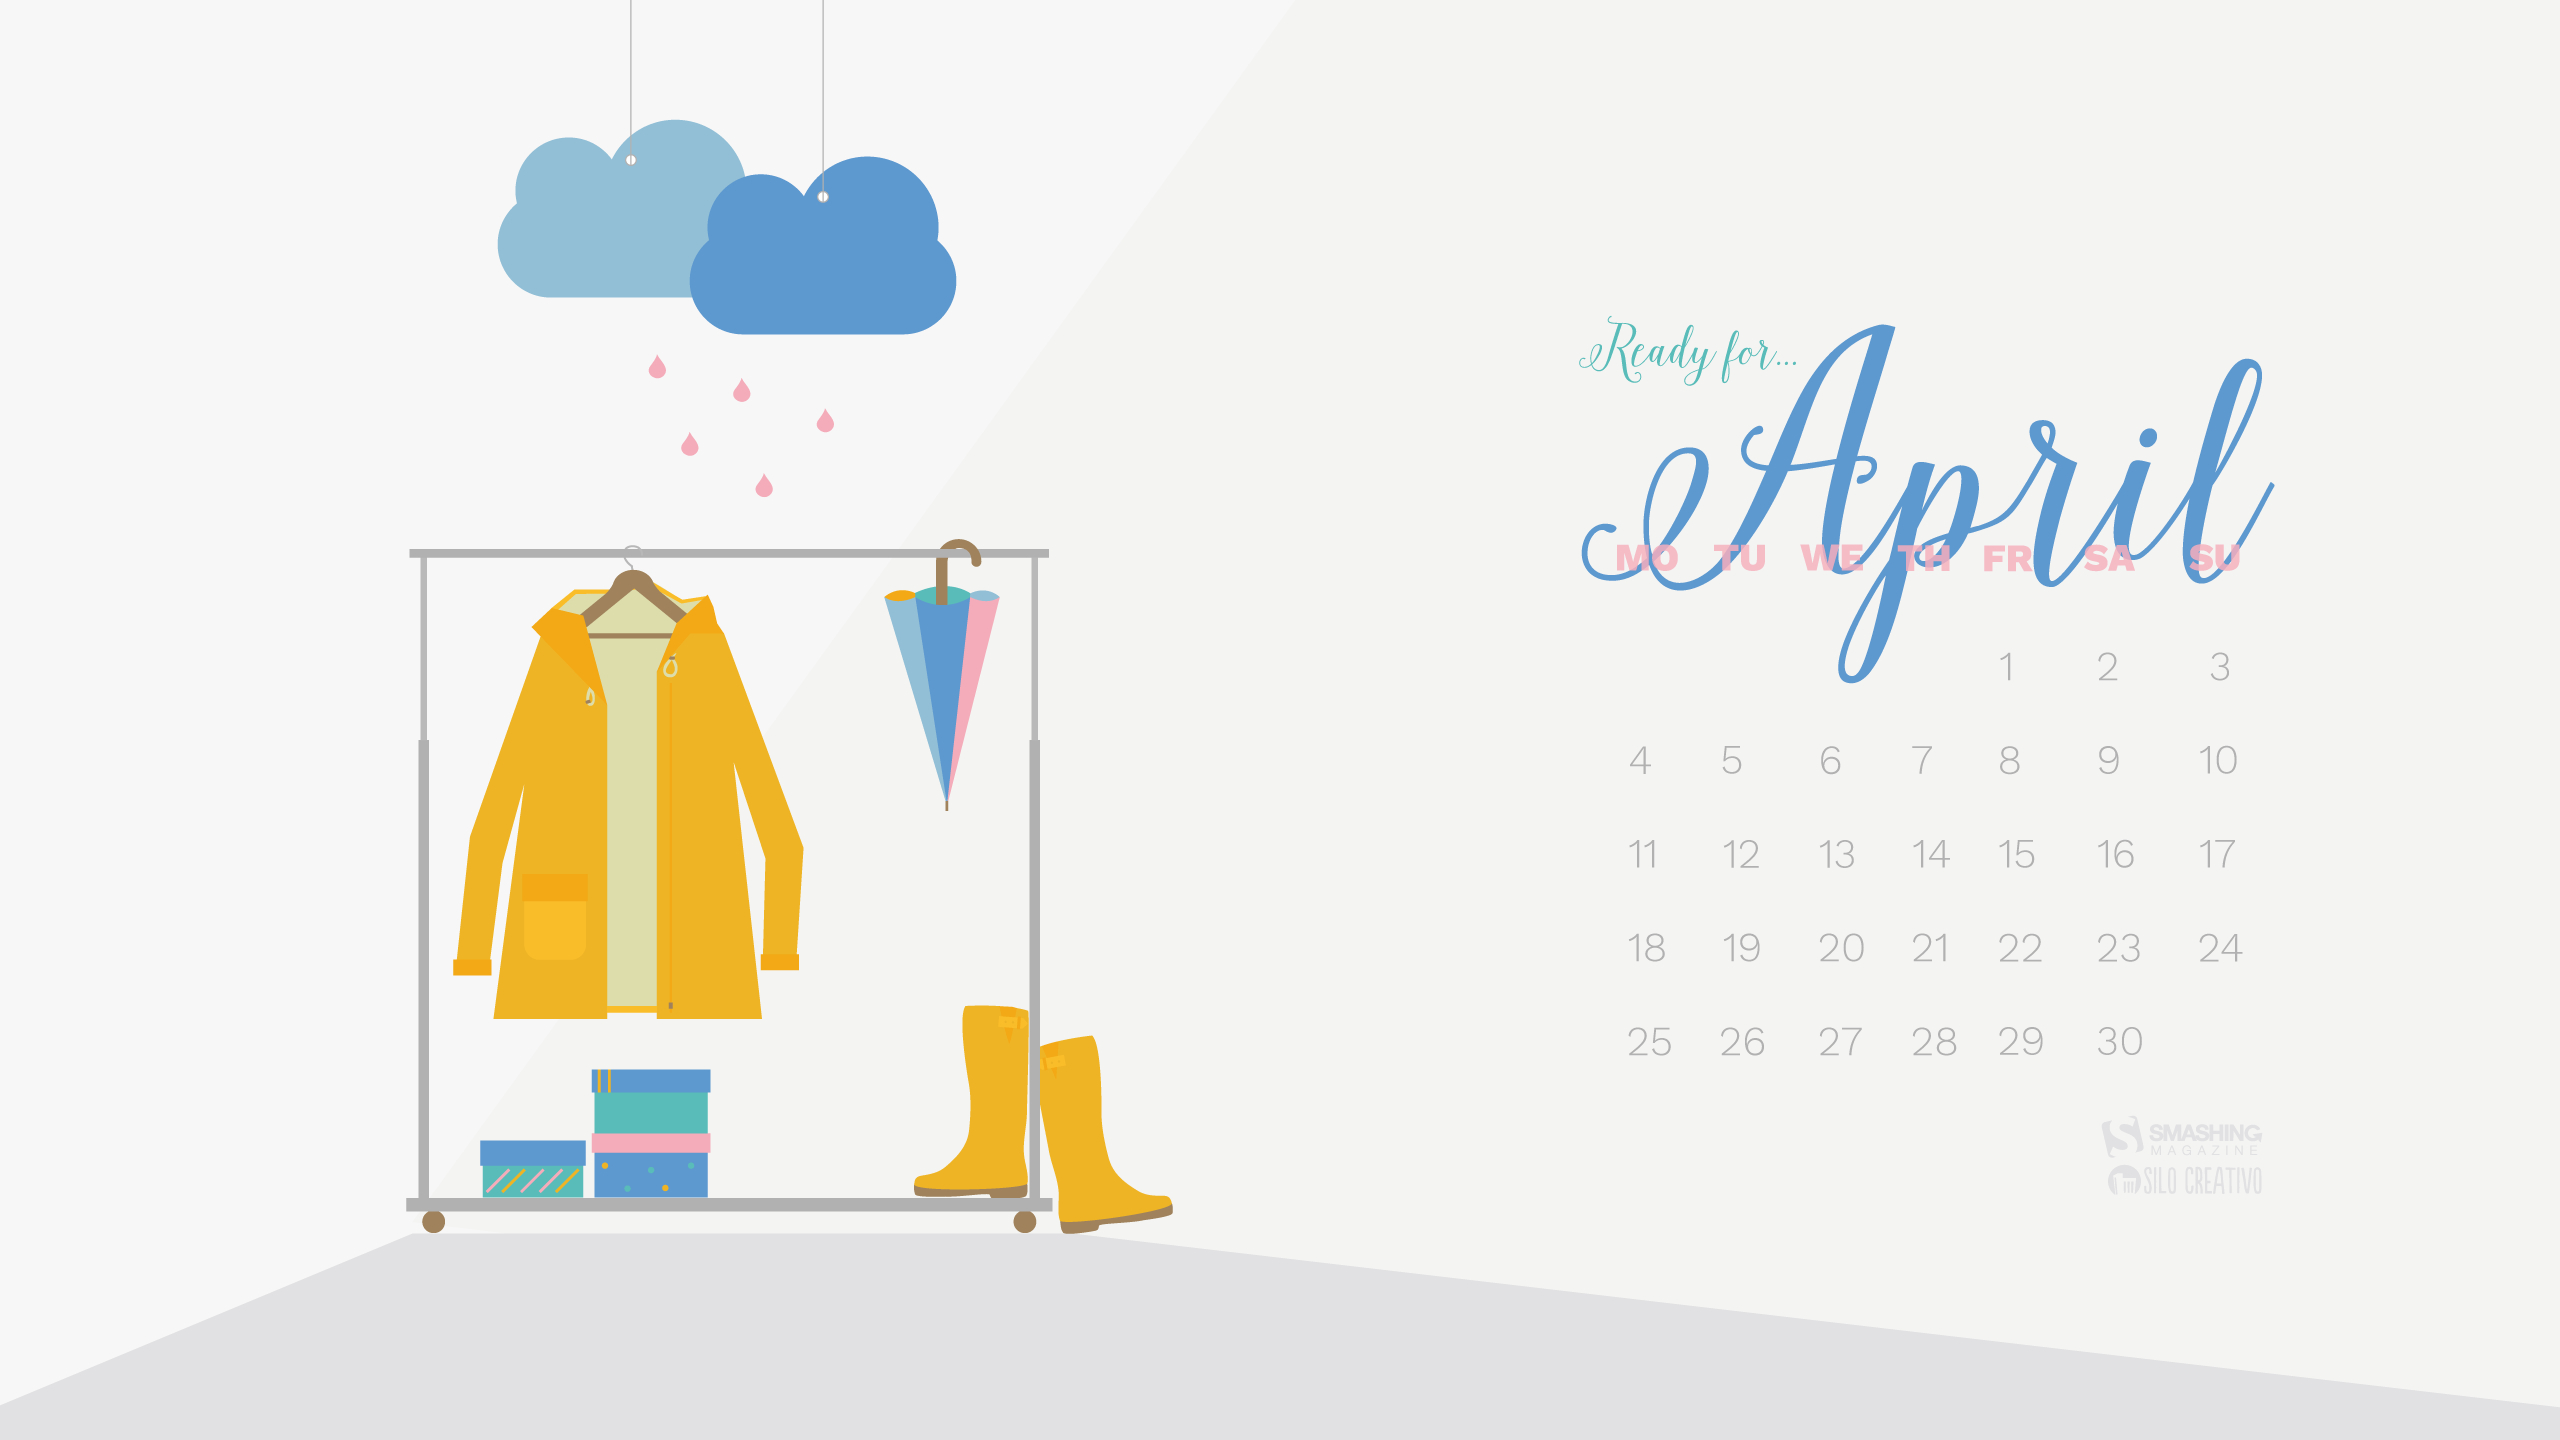 Free Download Desktop Wallpaper Calendars April 2016 intended for Smashing Magazine Calendar